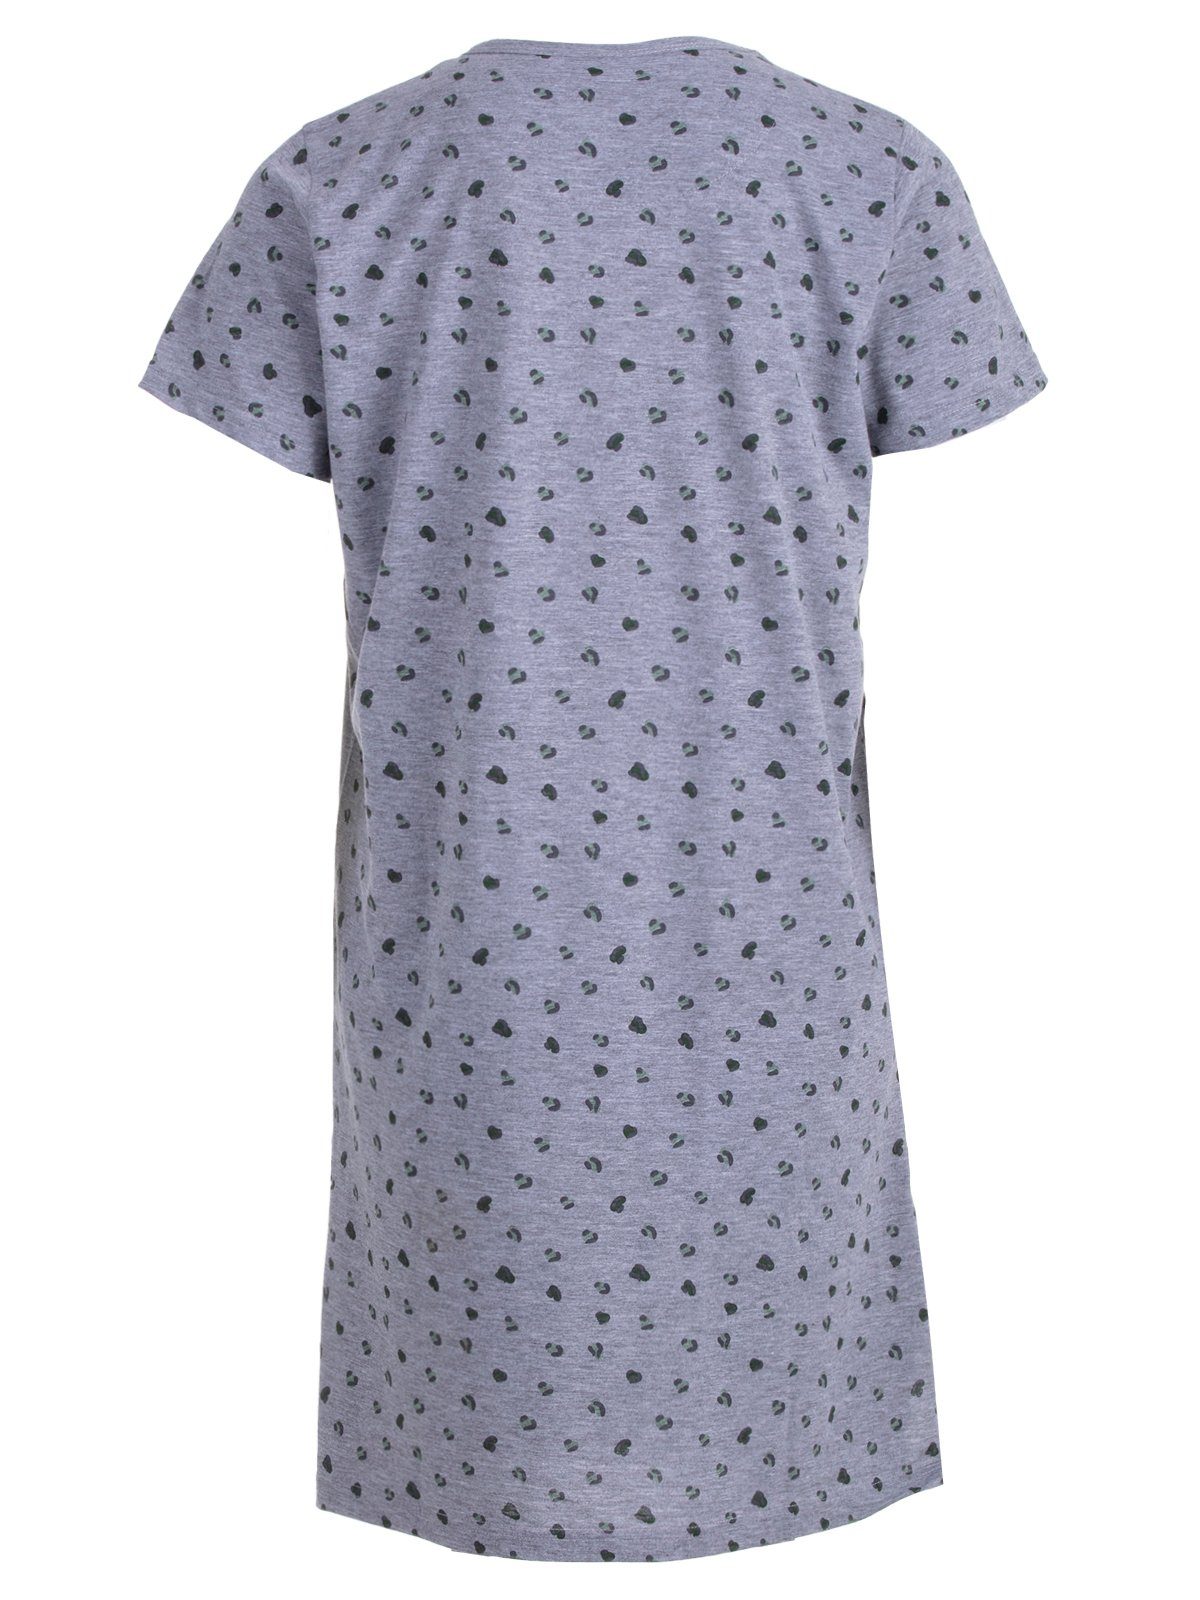 Herzleo Kurzarm Nachthemd Nachthemd grau - zeitlos Kellerfalte